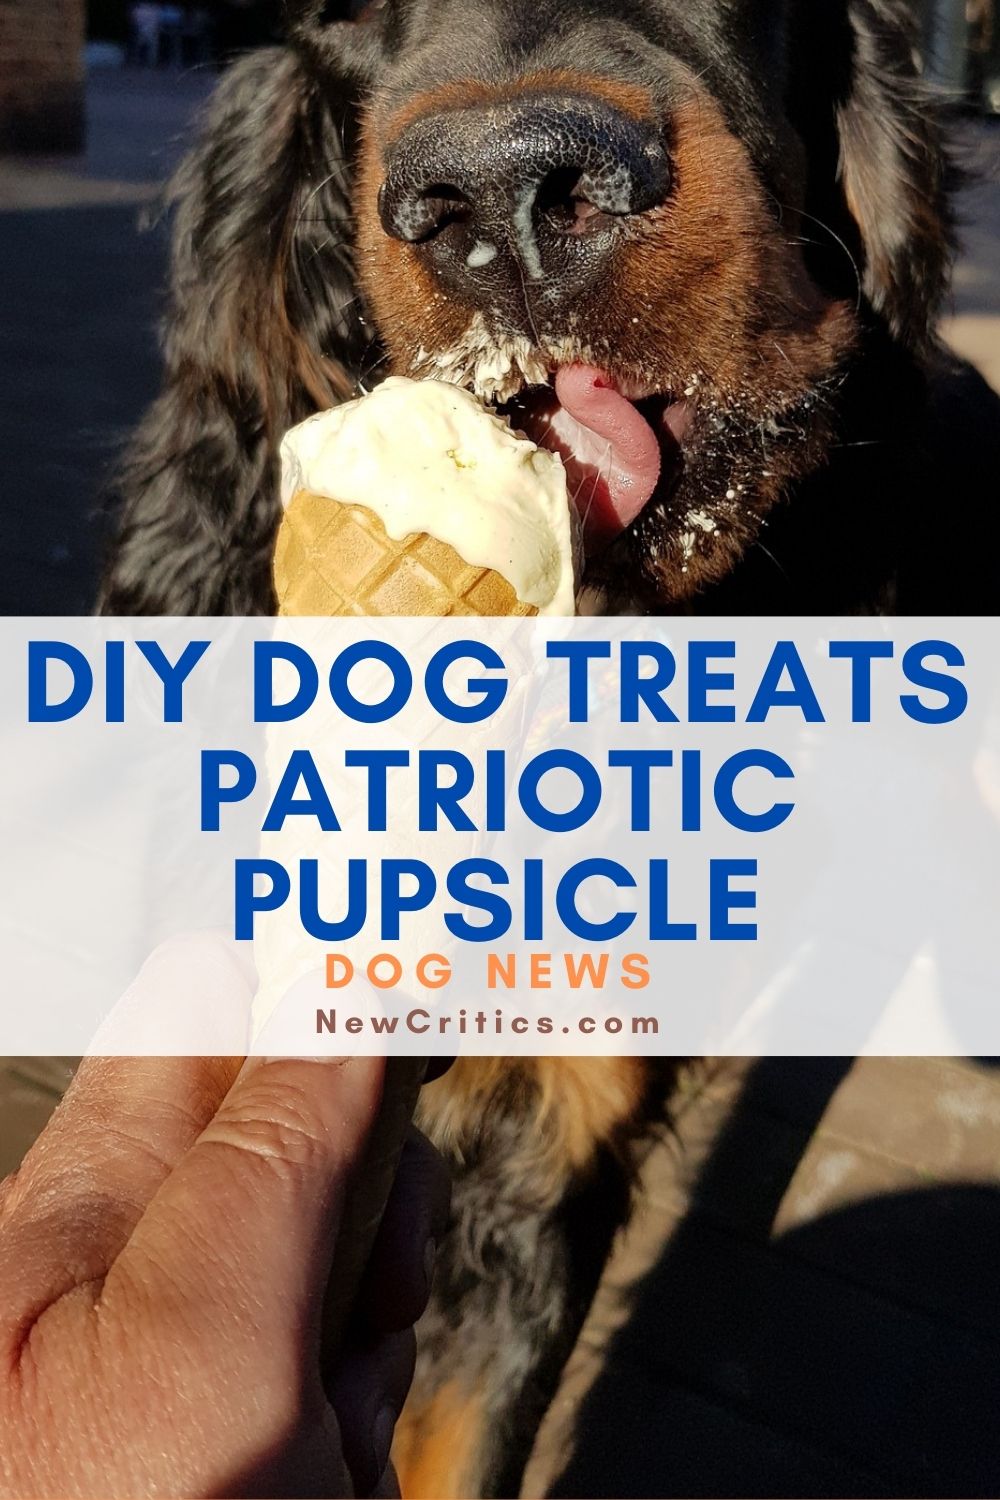 DIY Dog Treats Patriotic Pupsicle / Pixabay